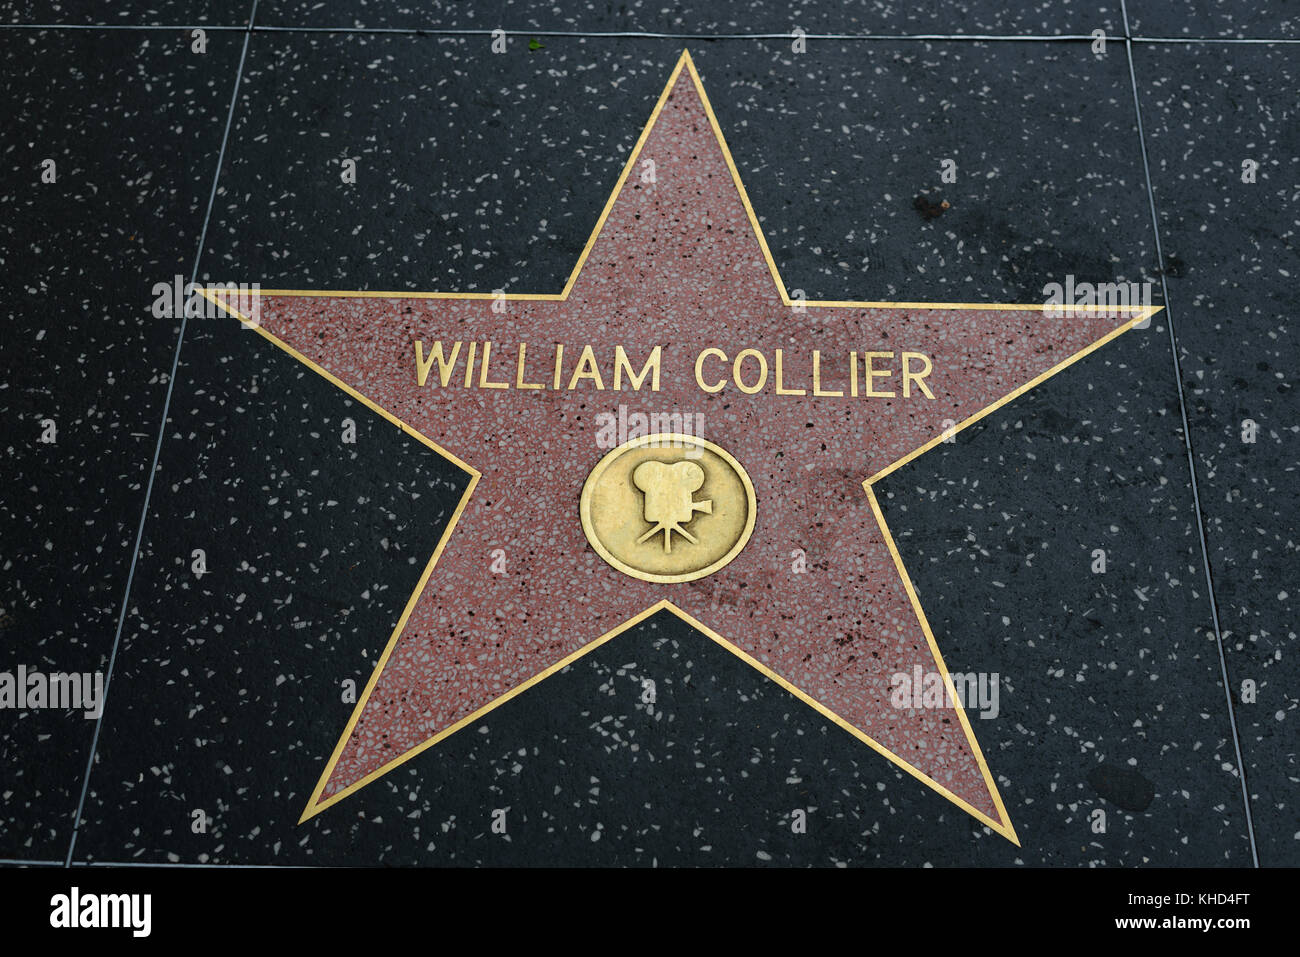 HOLLYWOOD, CA - DEZEMBER 06: William Collier Star auf dem Hollywood Walk of Fame in Hollywood, Kalifornien am 6. Dezember 2016. Stockfoto